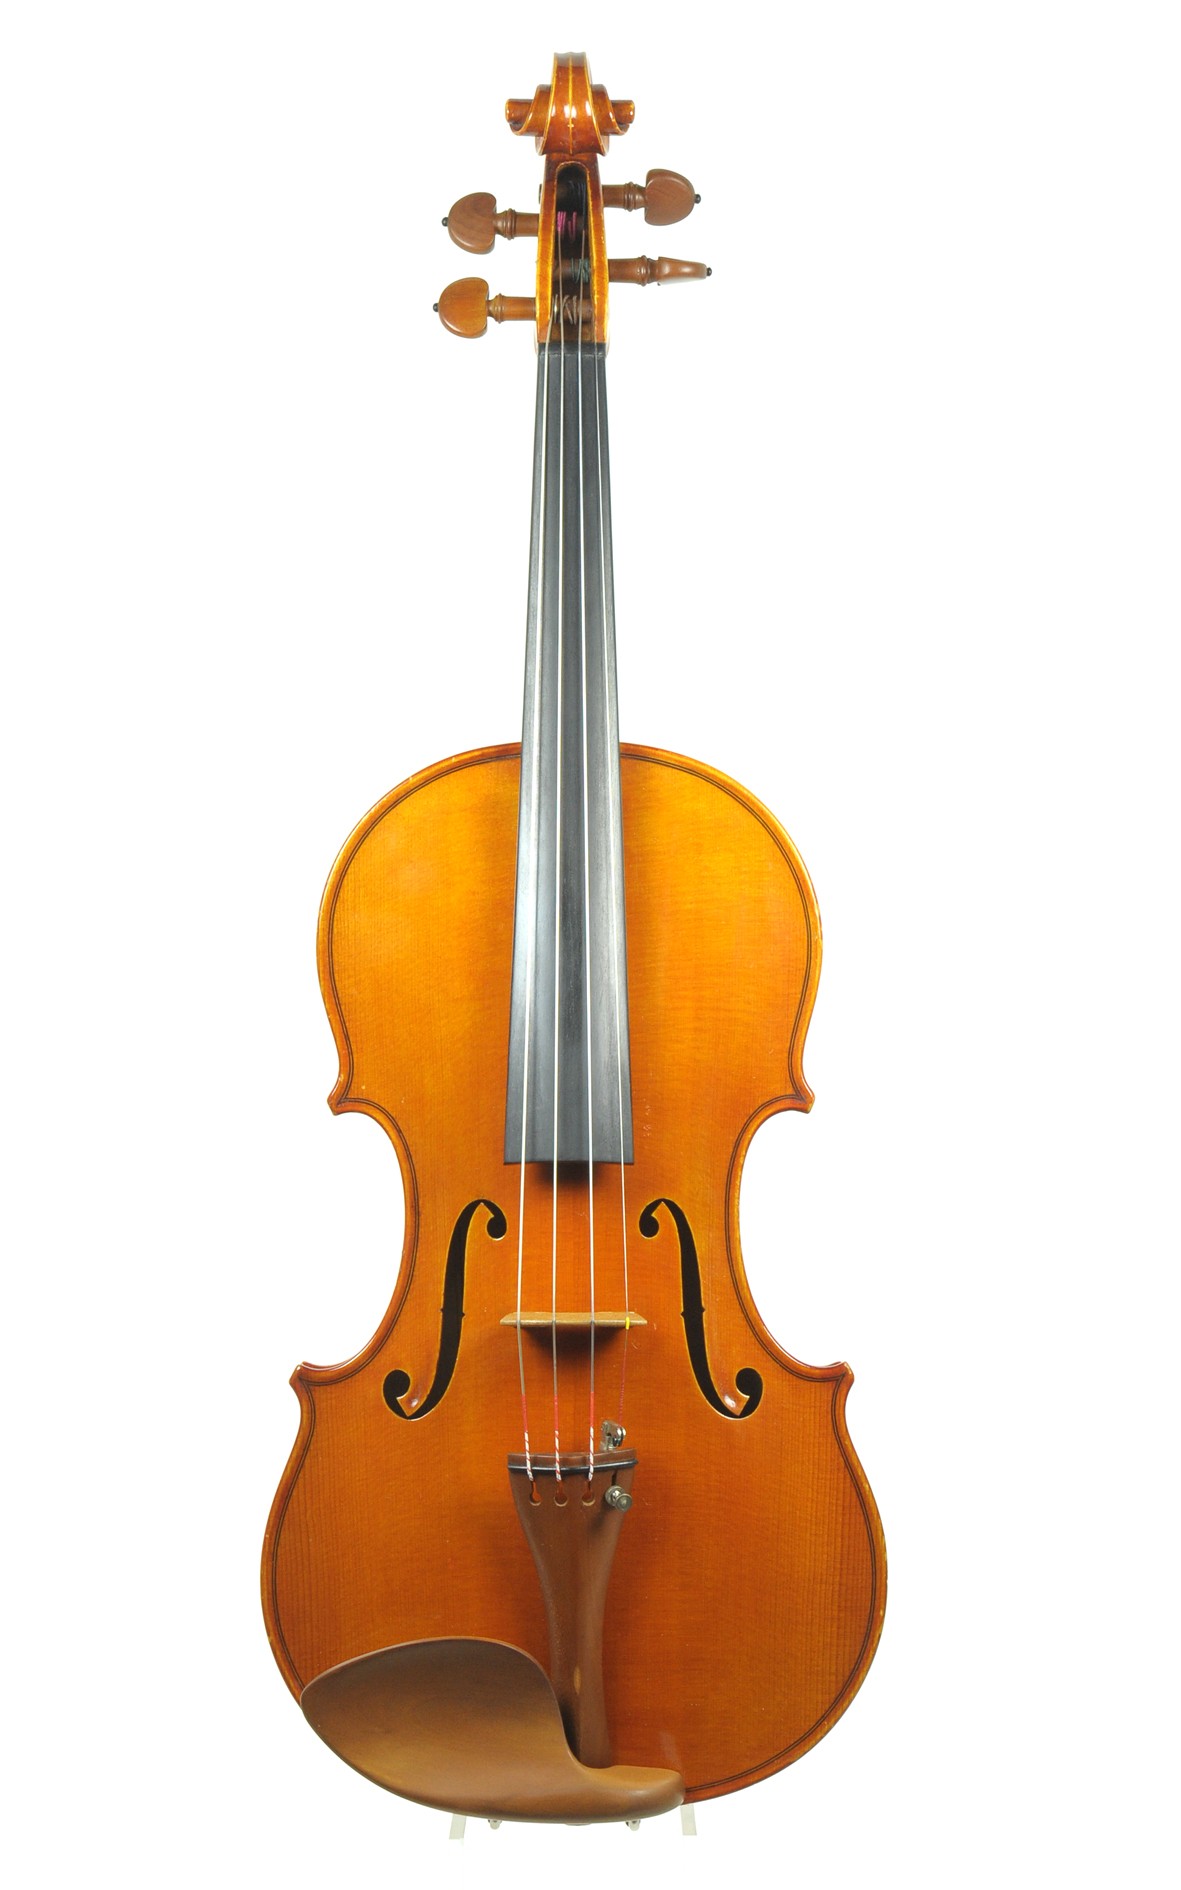 7/8 German violin after Guarnerius - top